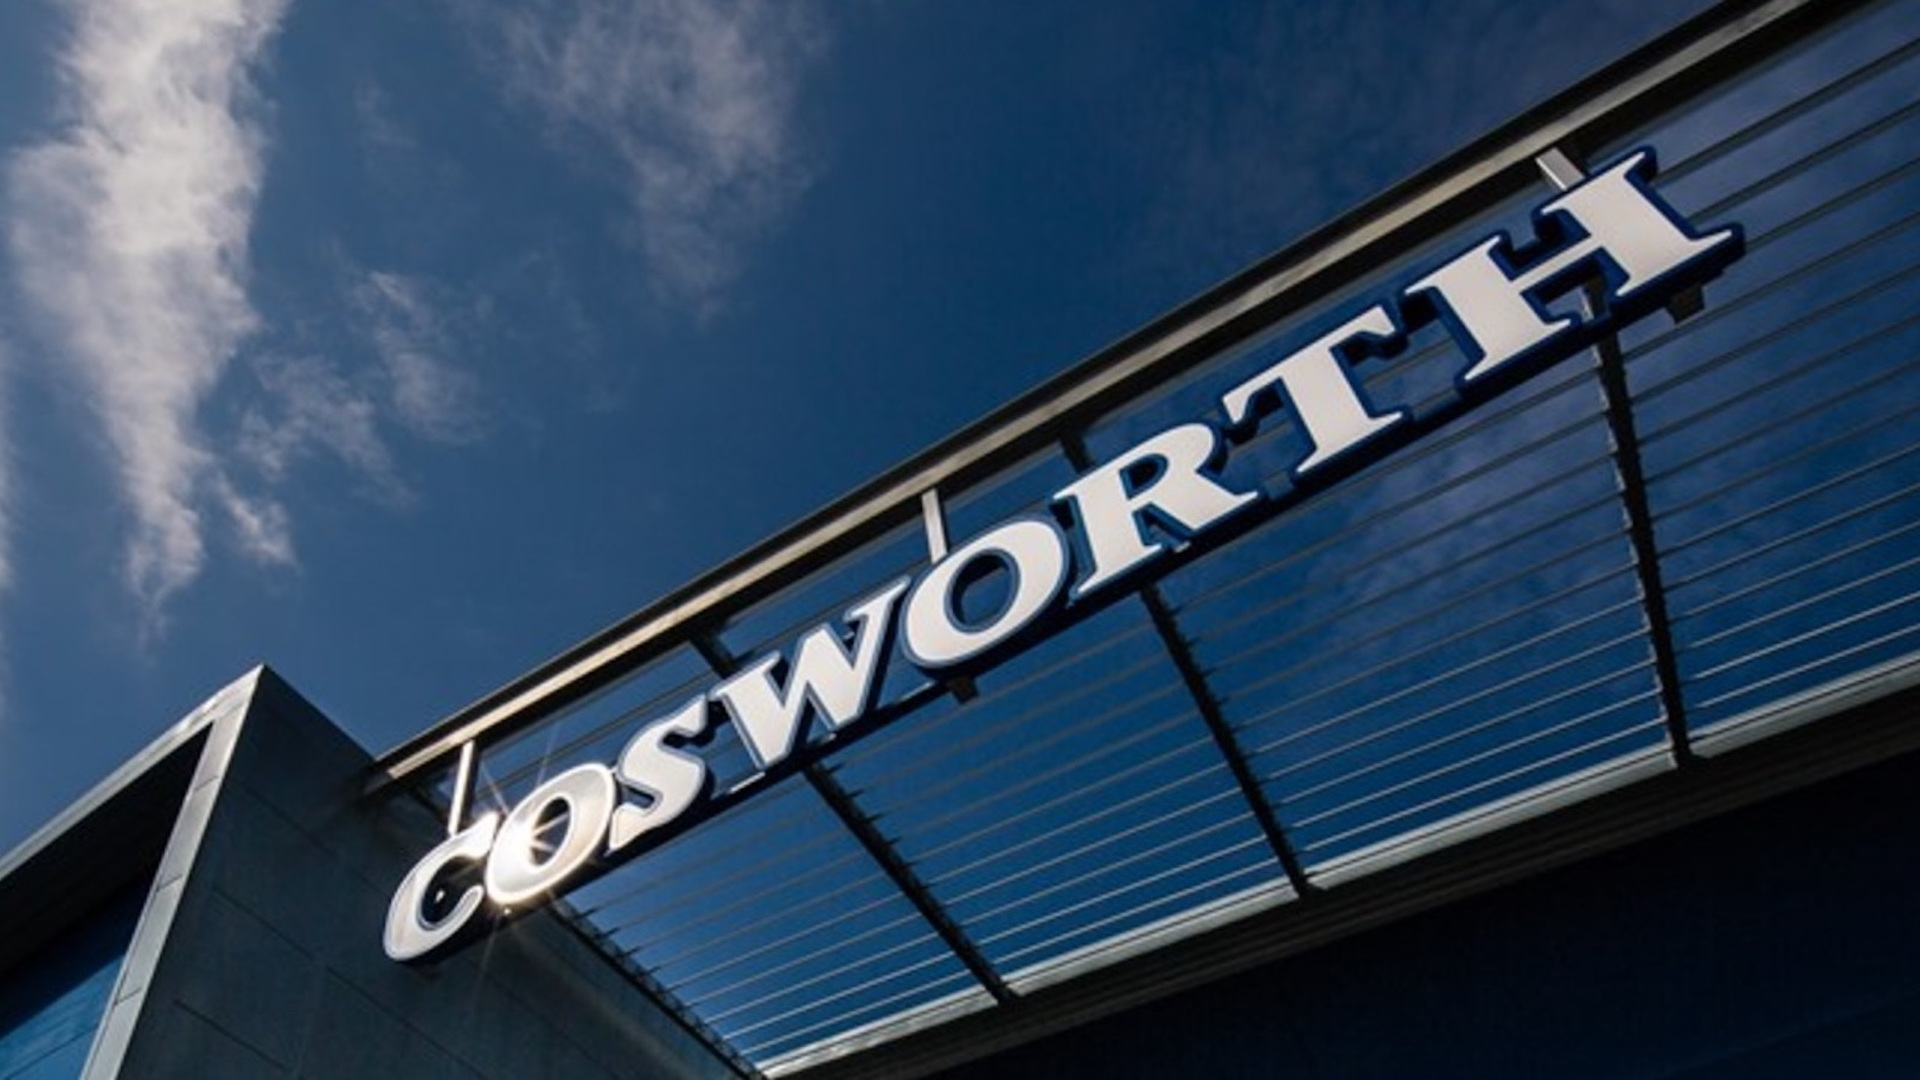 Cosworth corporate logo